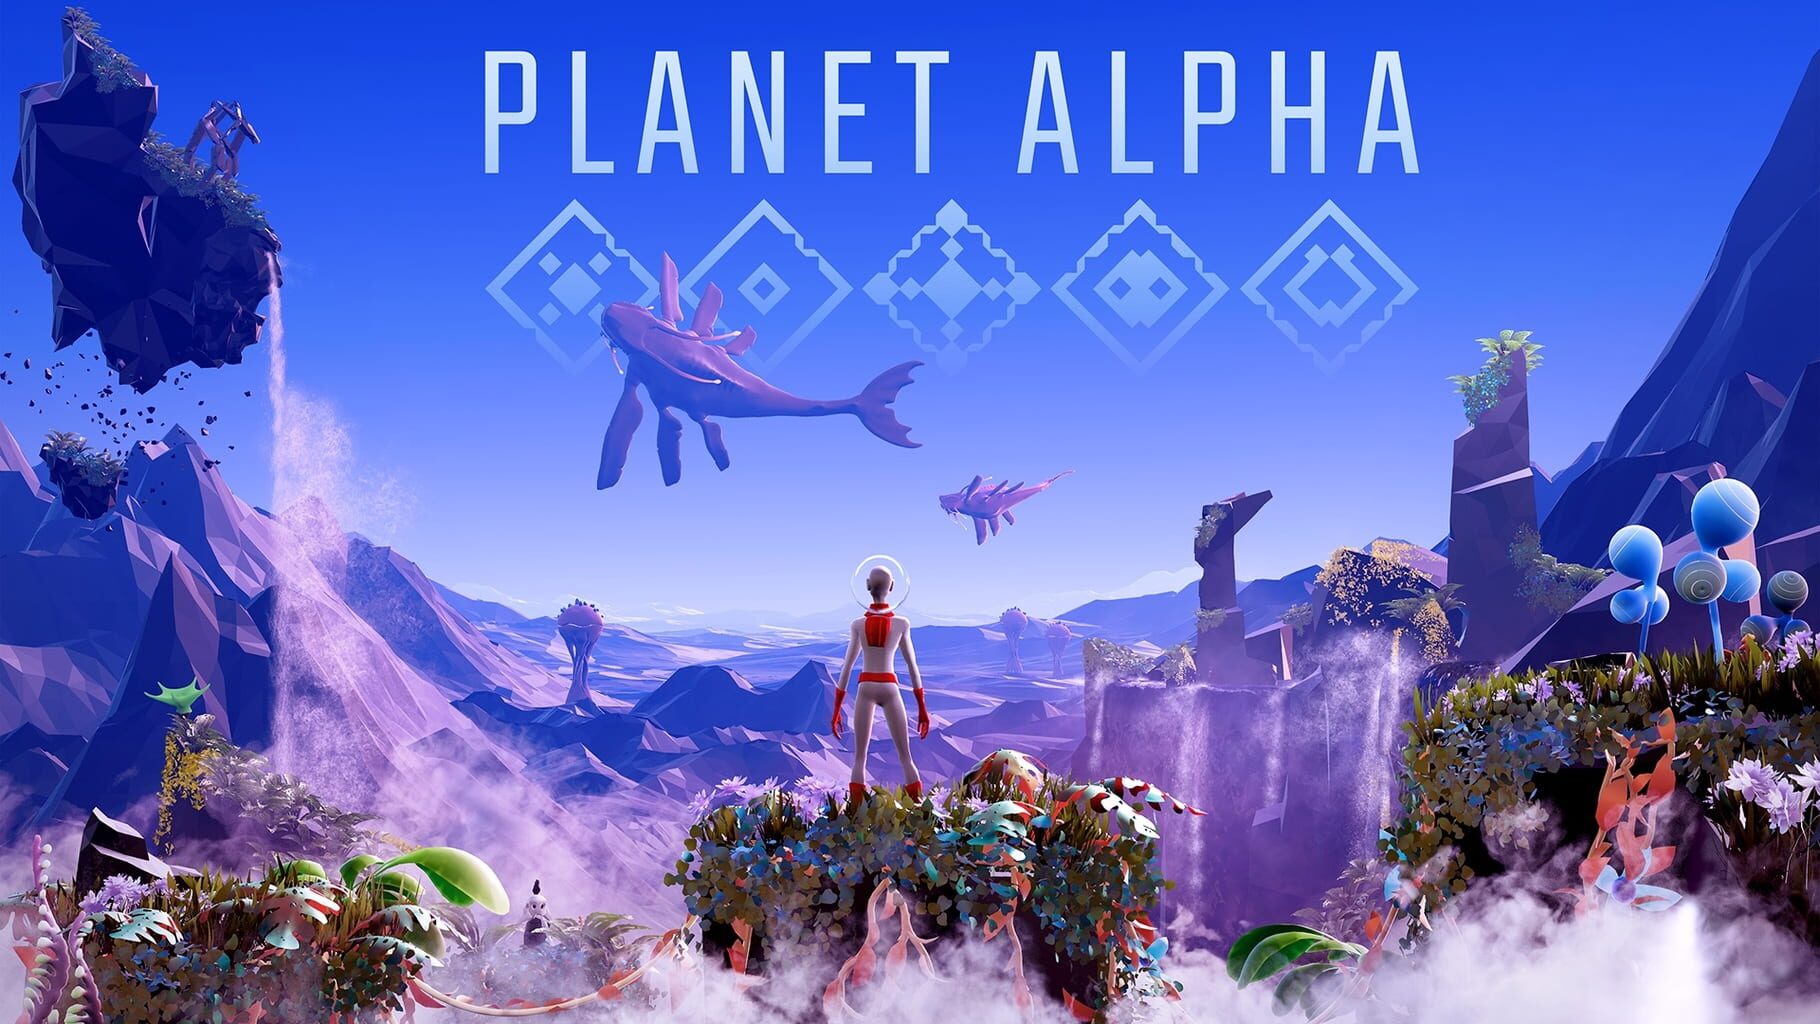 Planet Alpha artwork